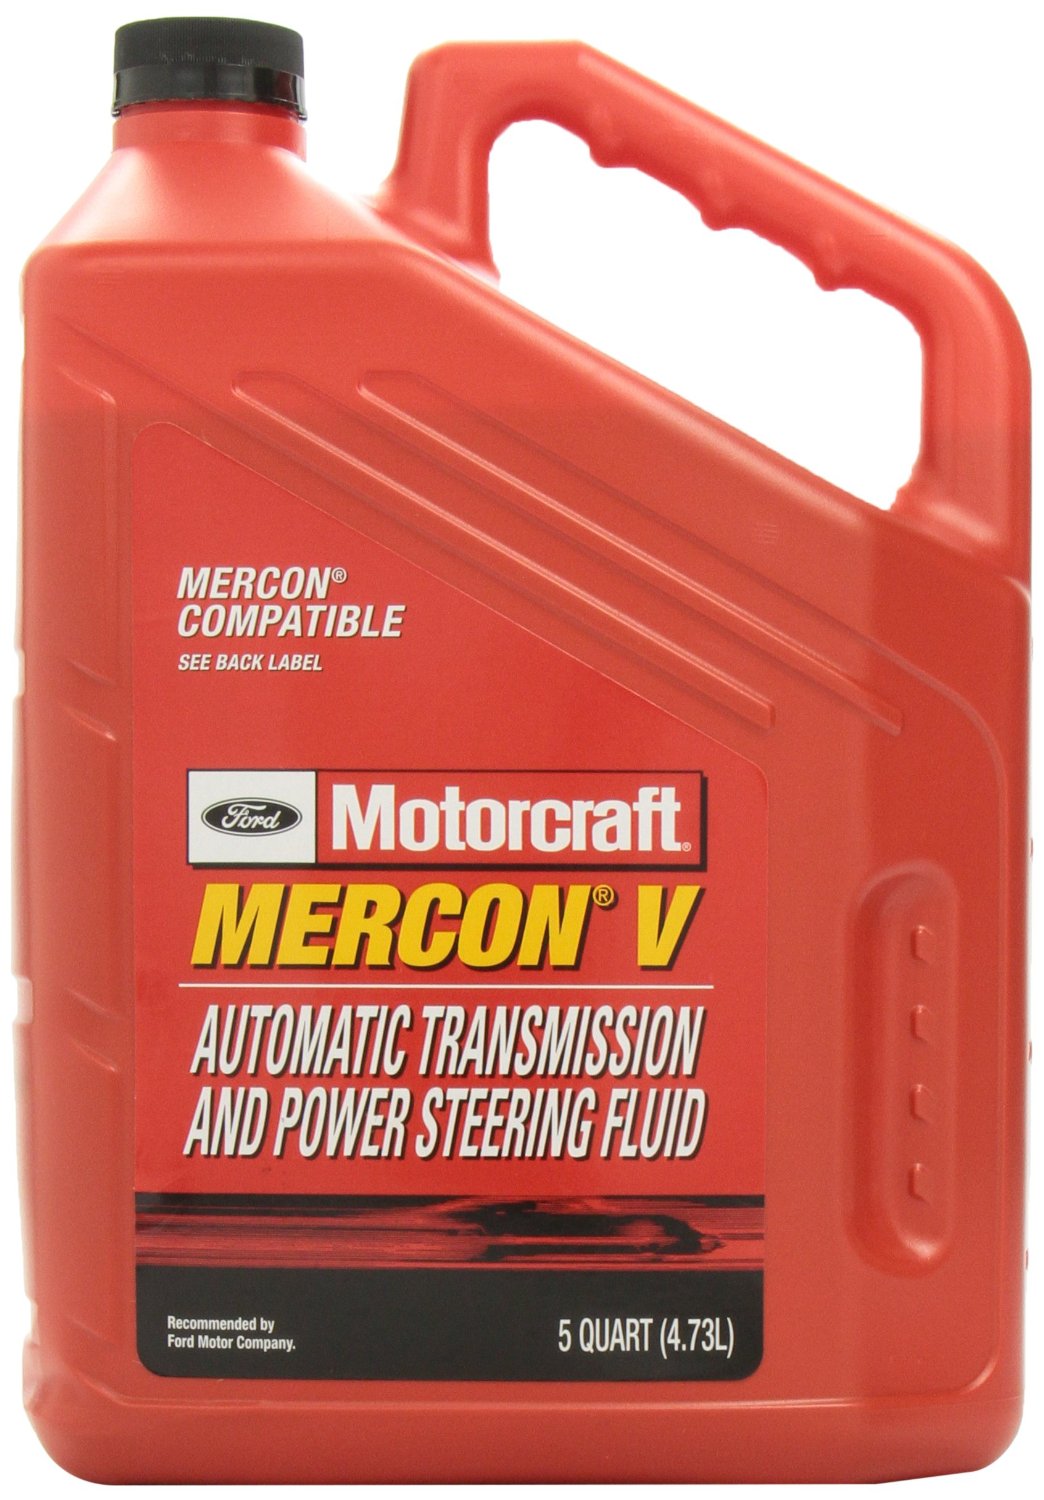 Motorcraft Mercon V Automatic Transmission Fluid